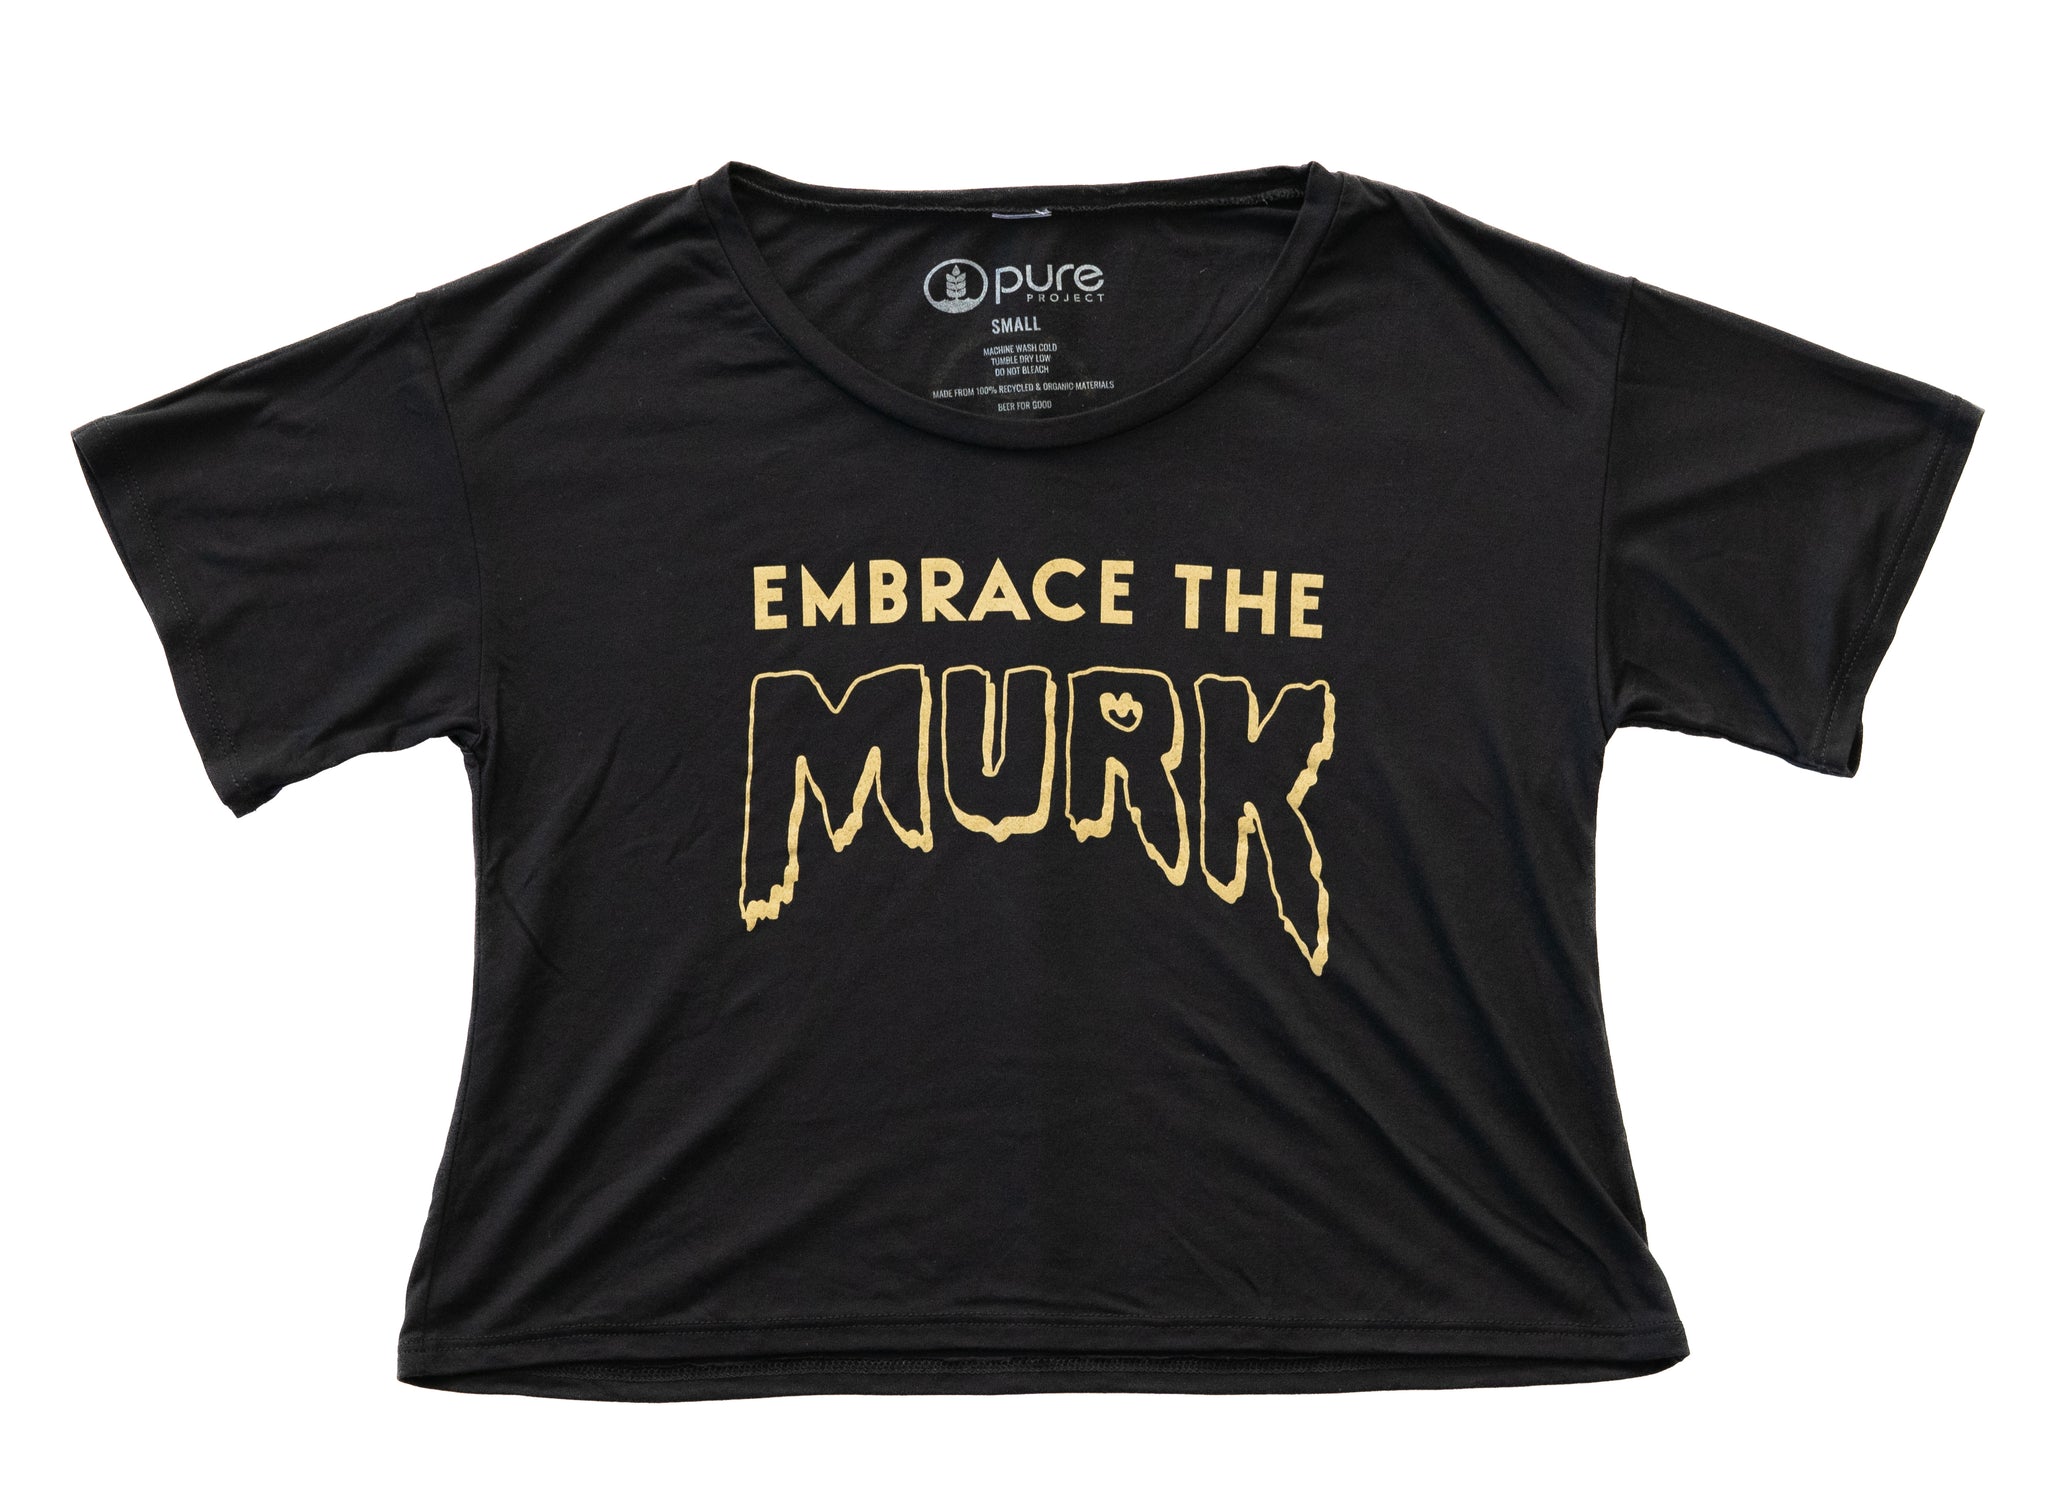 "Embrace The Murk" Scoop Neck Tee